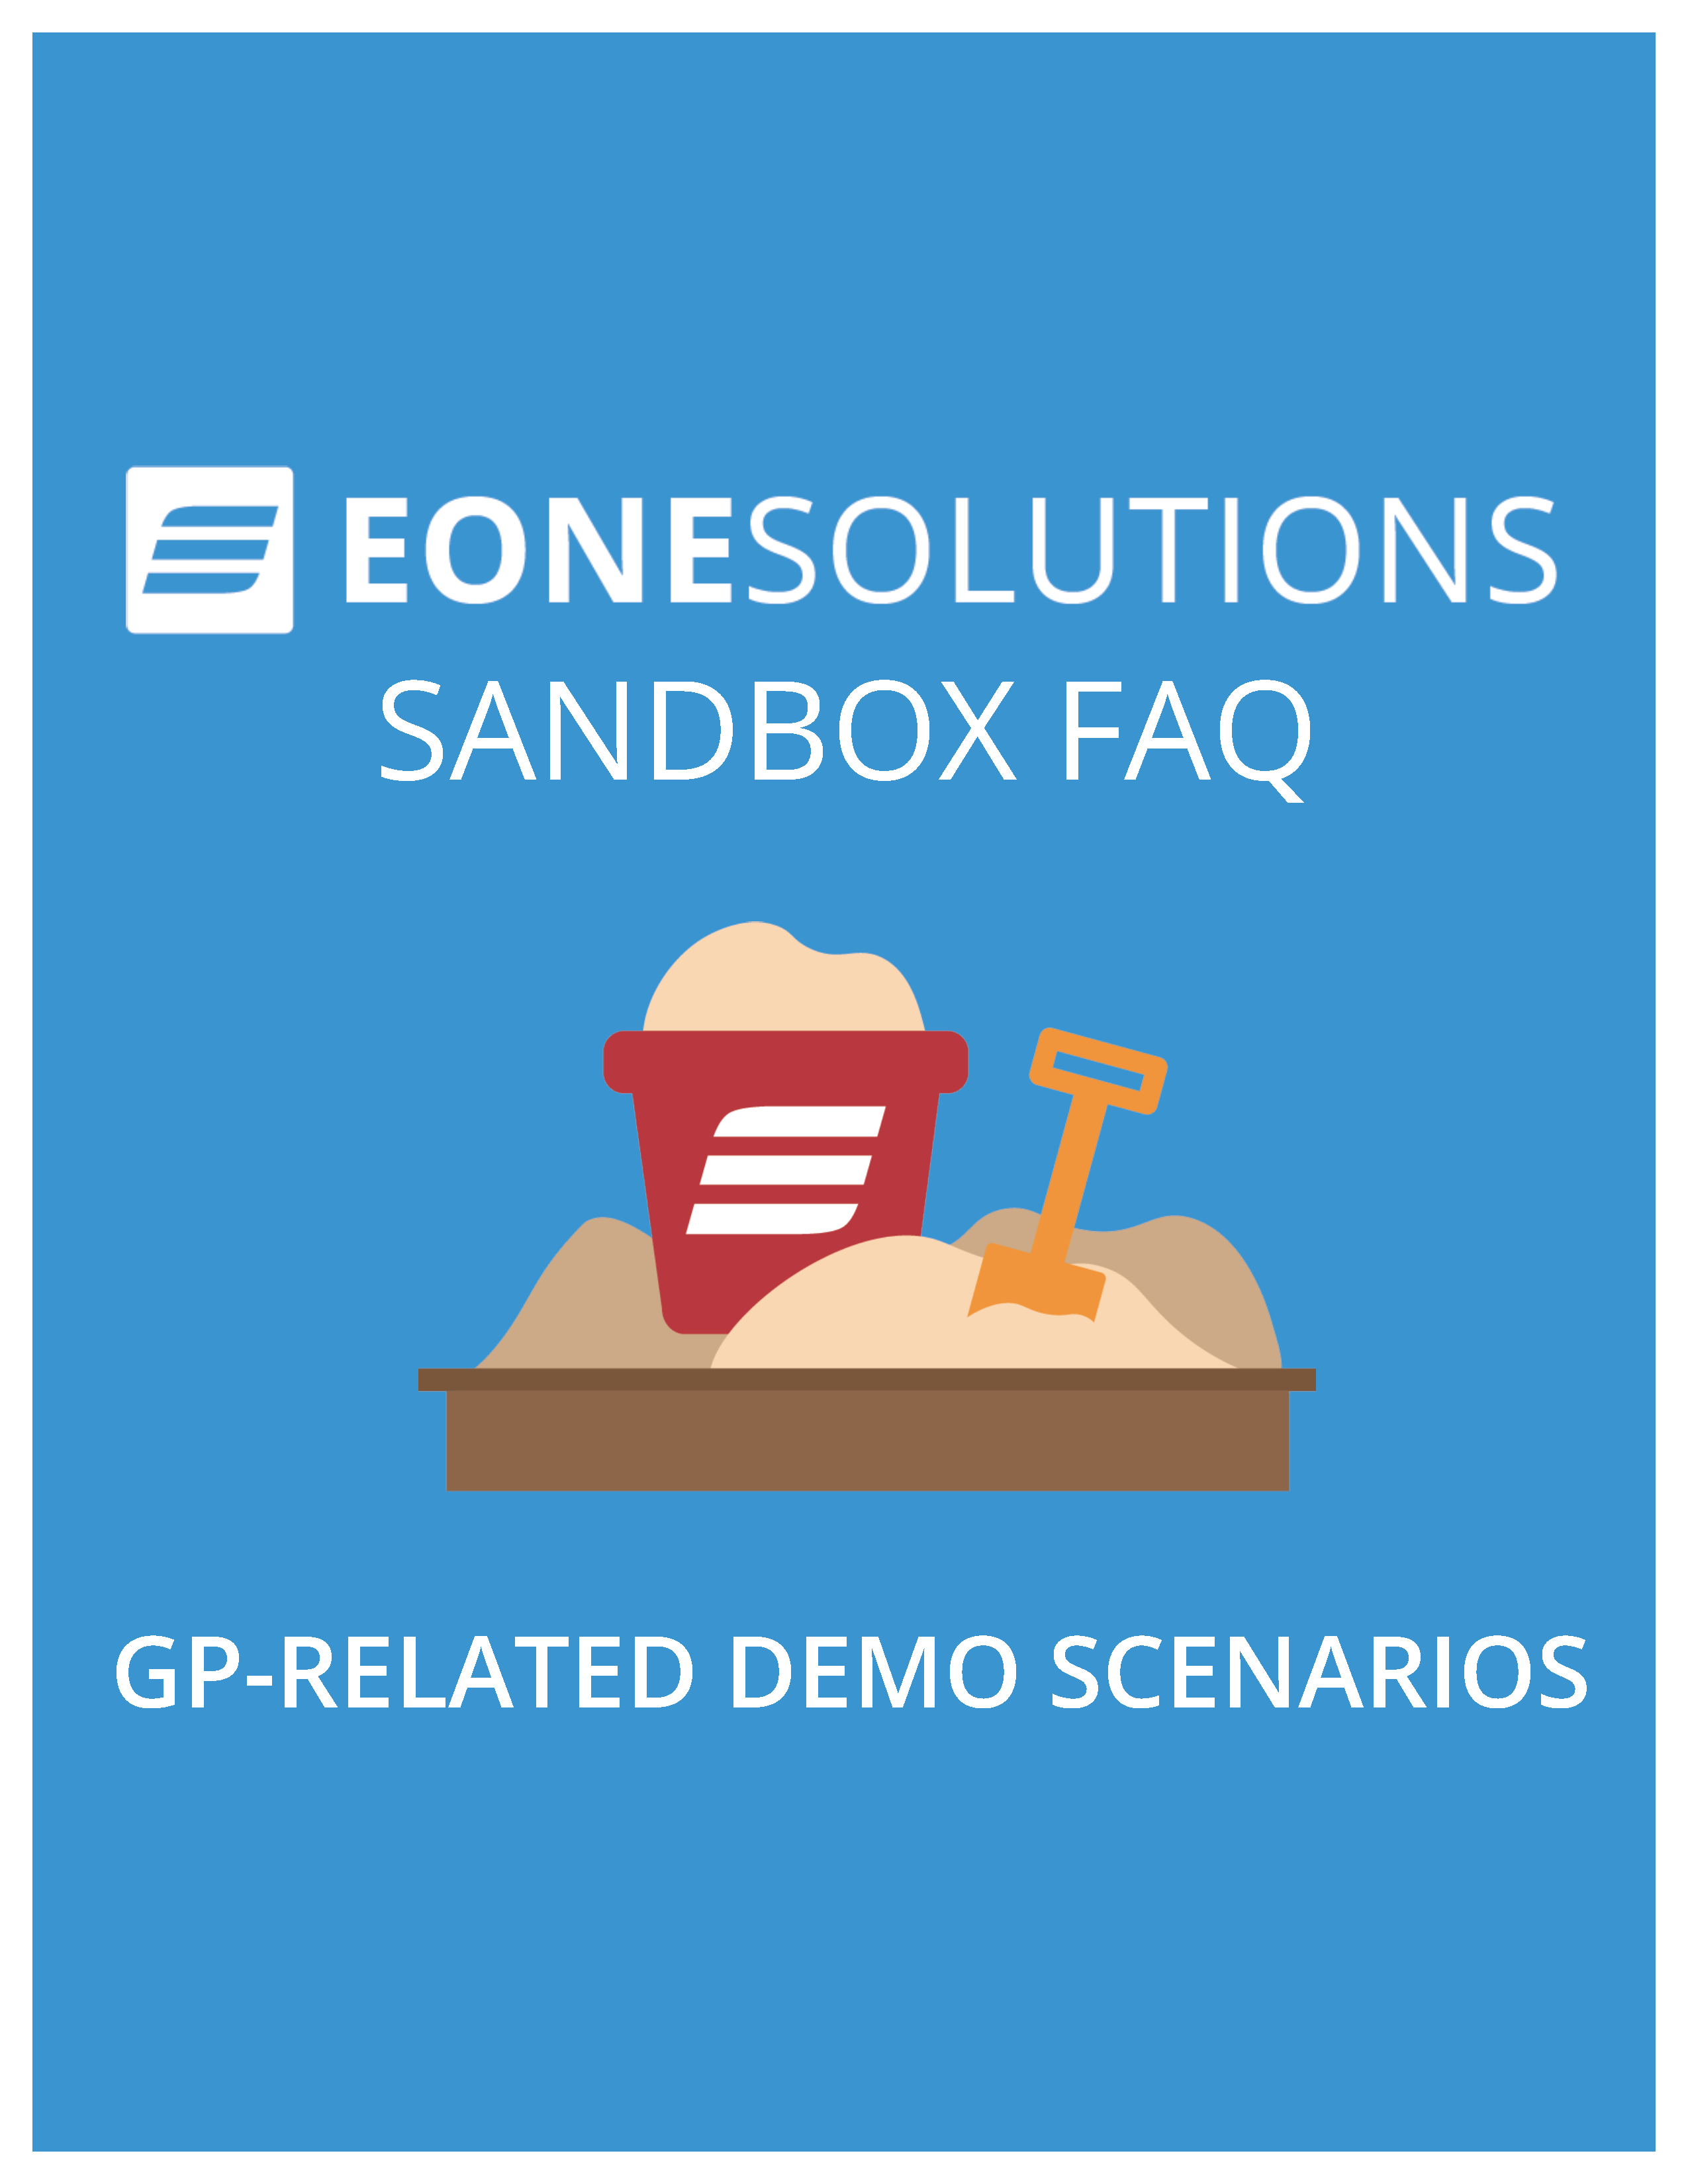 eOne Solutions Sandbox FAQ - GP-Related Demo Scenarios